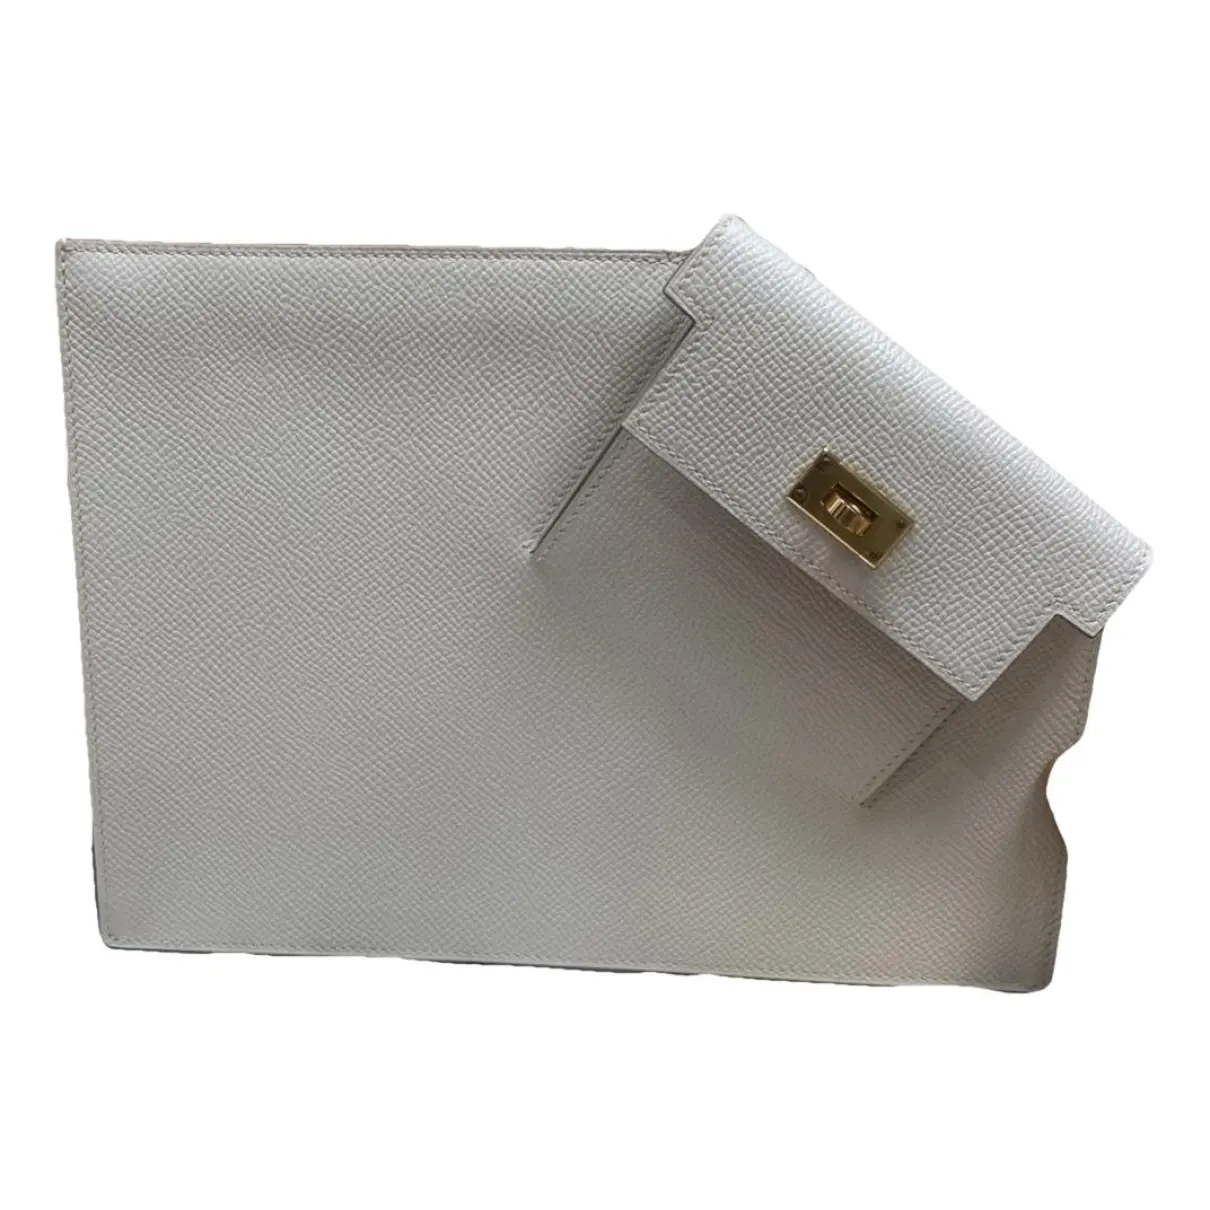 Kelly Pocket To Go leather clutch bag Hermès